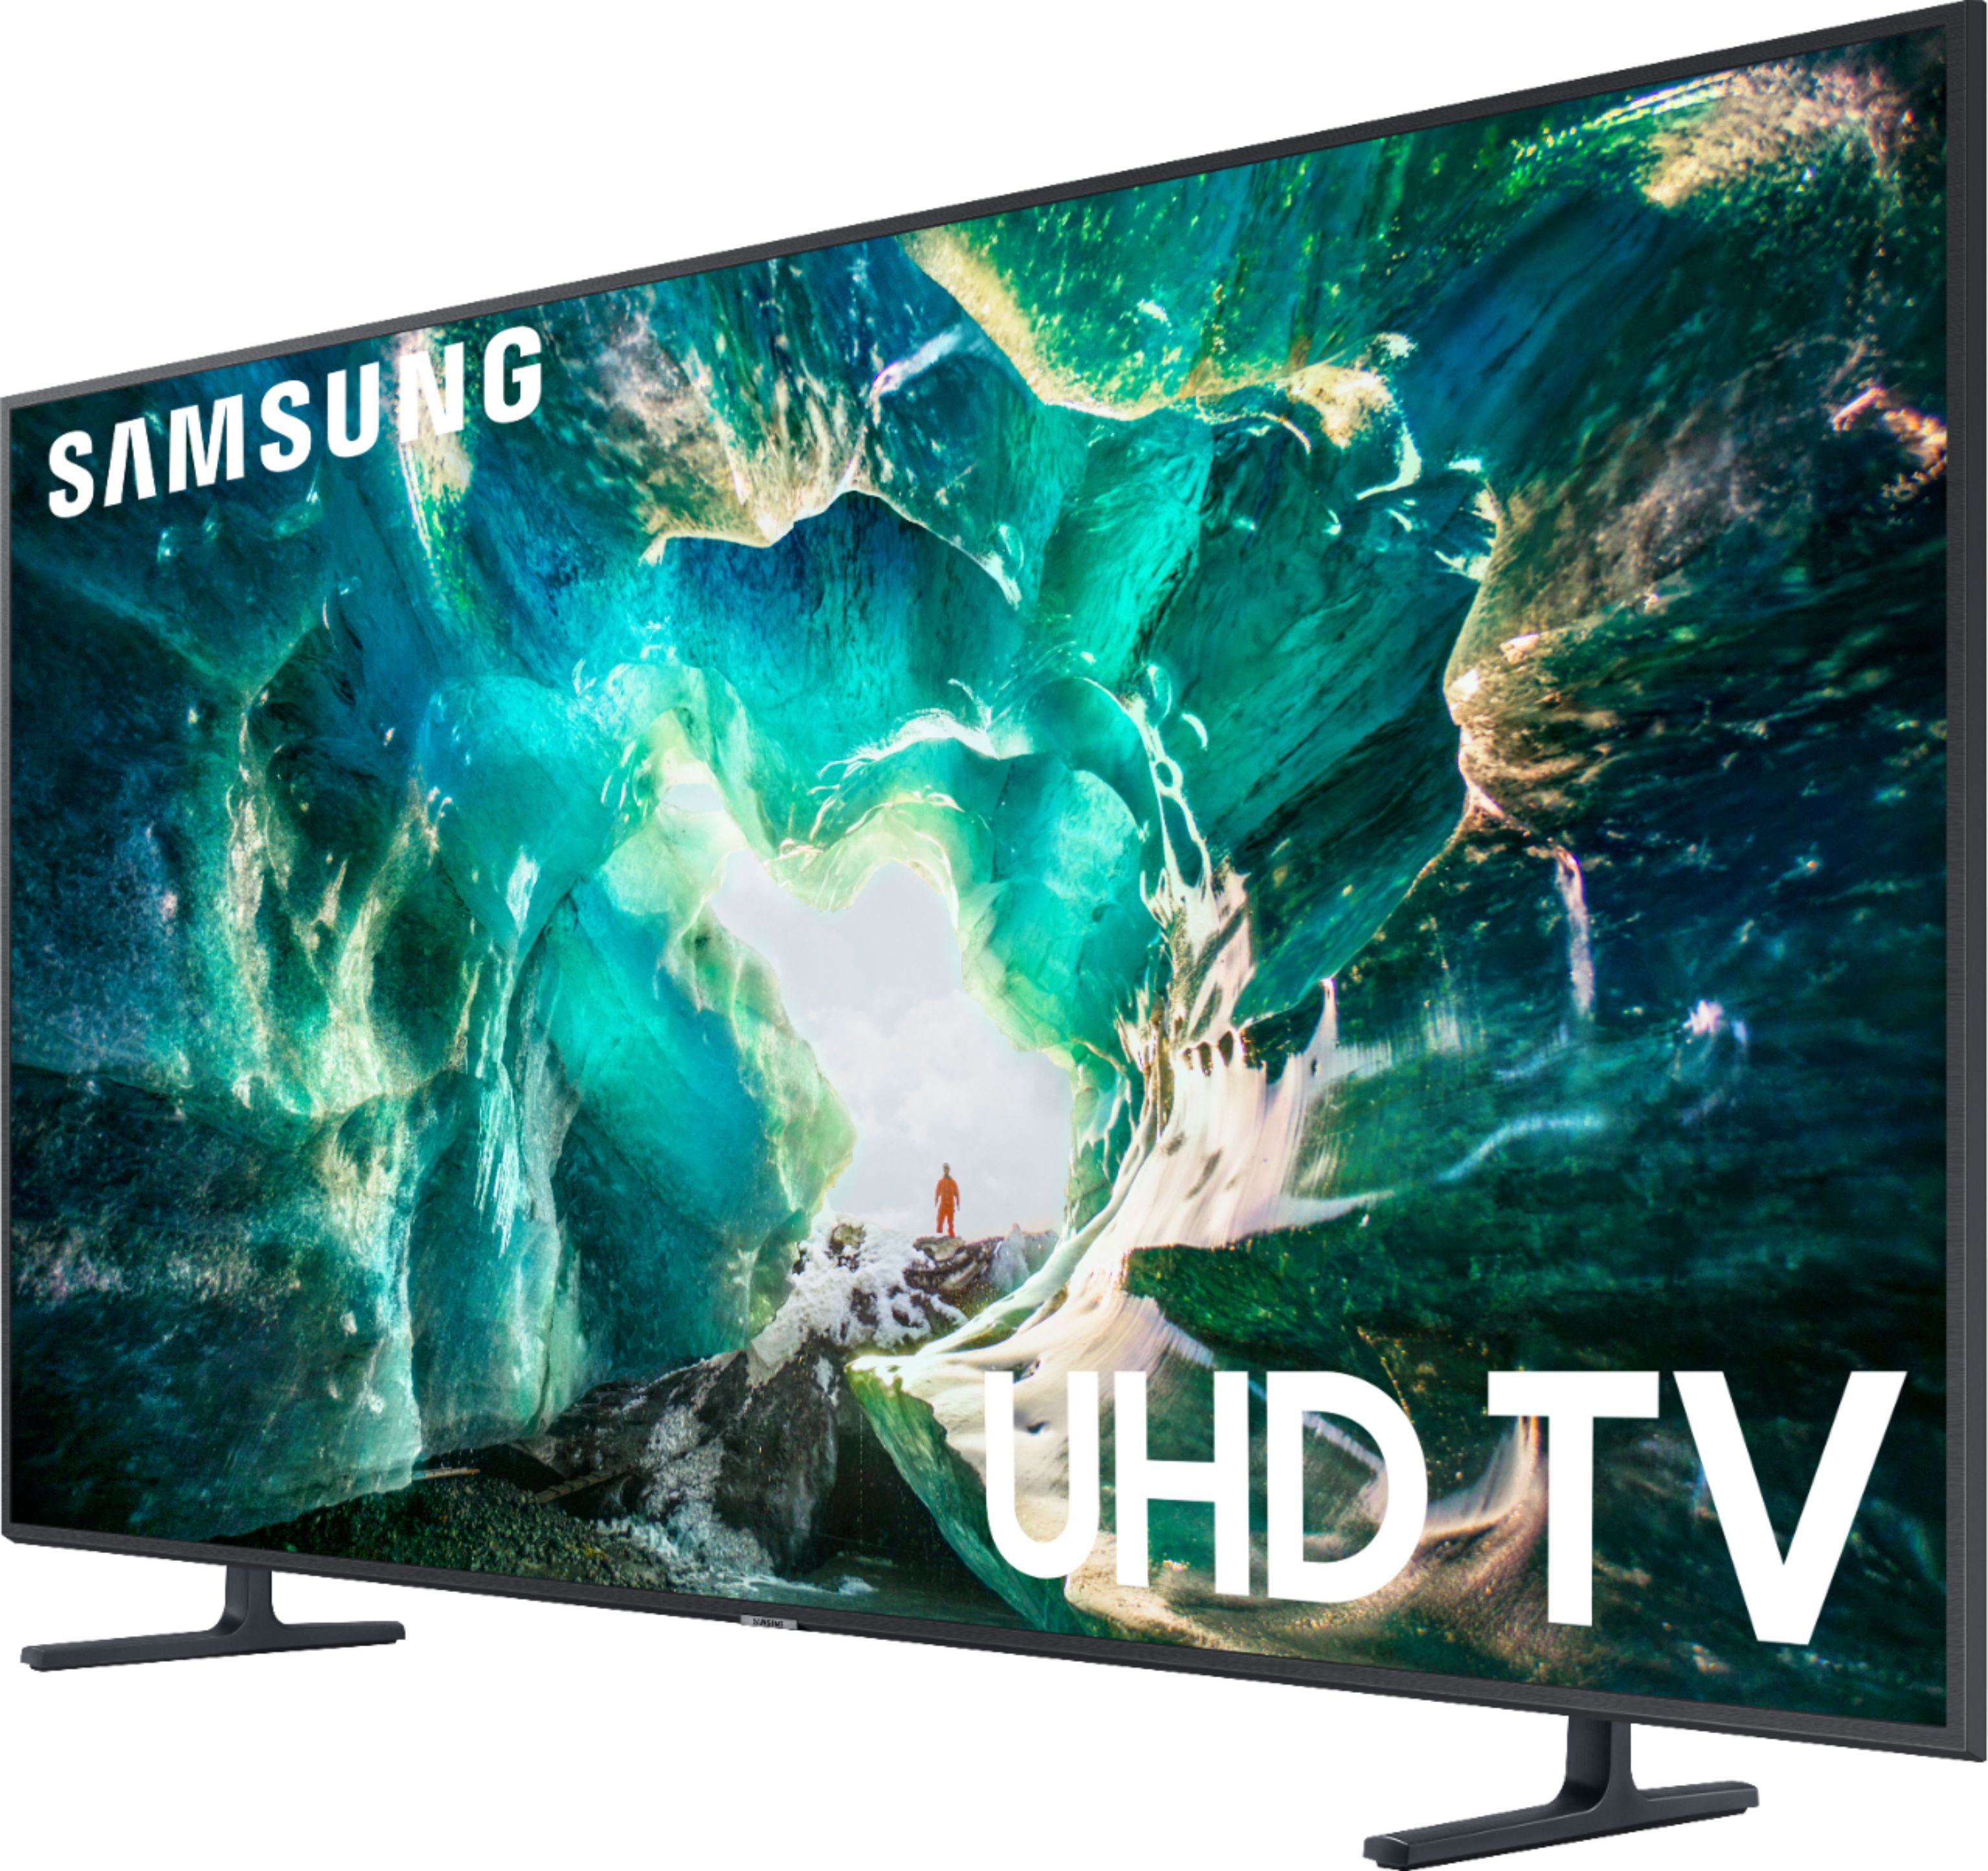 fritaget prop kaos Best Buy: Samsung 55" Class 8 Series 4K UHD TV Smart LED with HDR  UN55RU8000FXZA